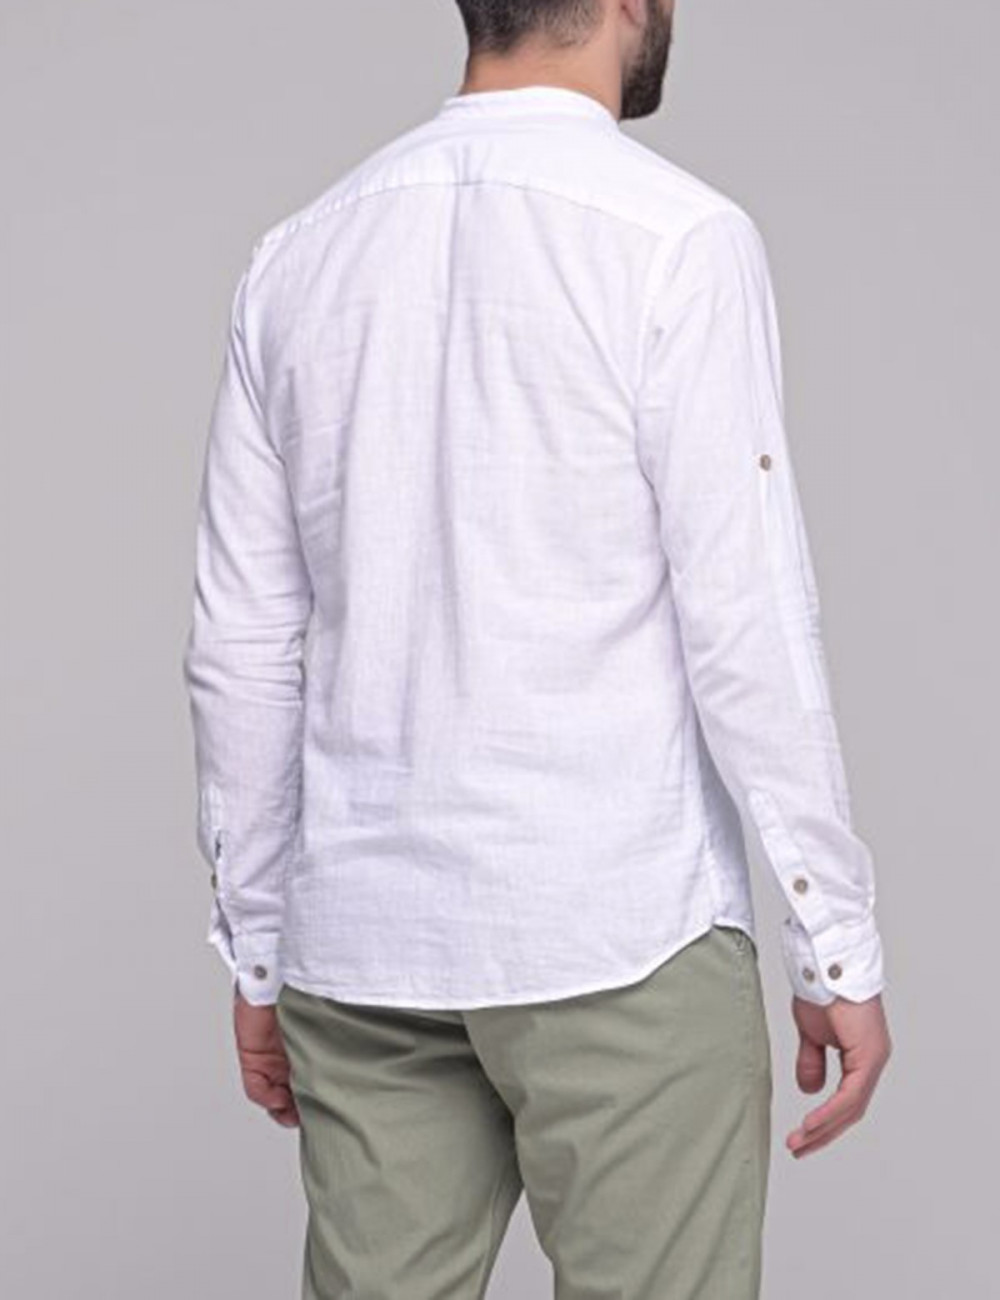 Ben Tailor ανδρική λευκή πουκαμίσα λινό  Komo 0575